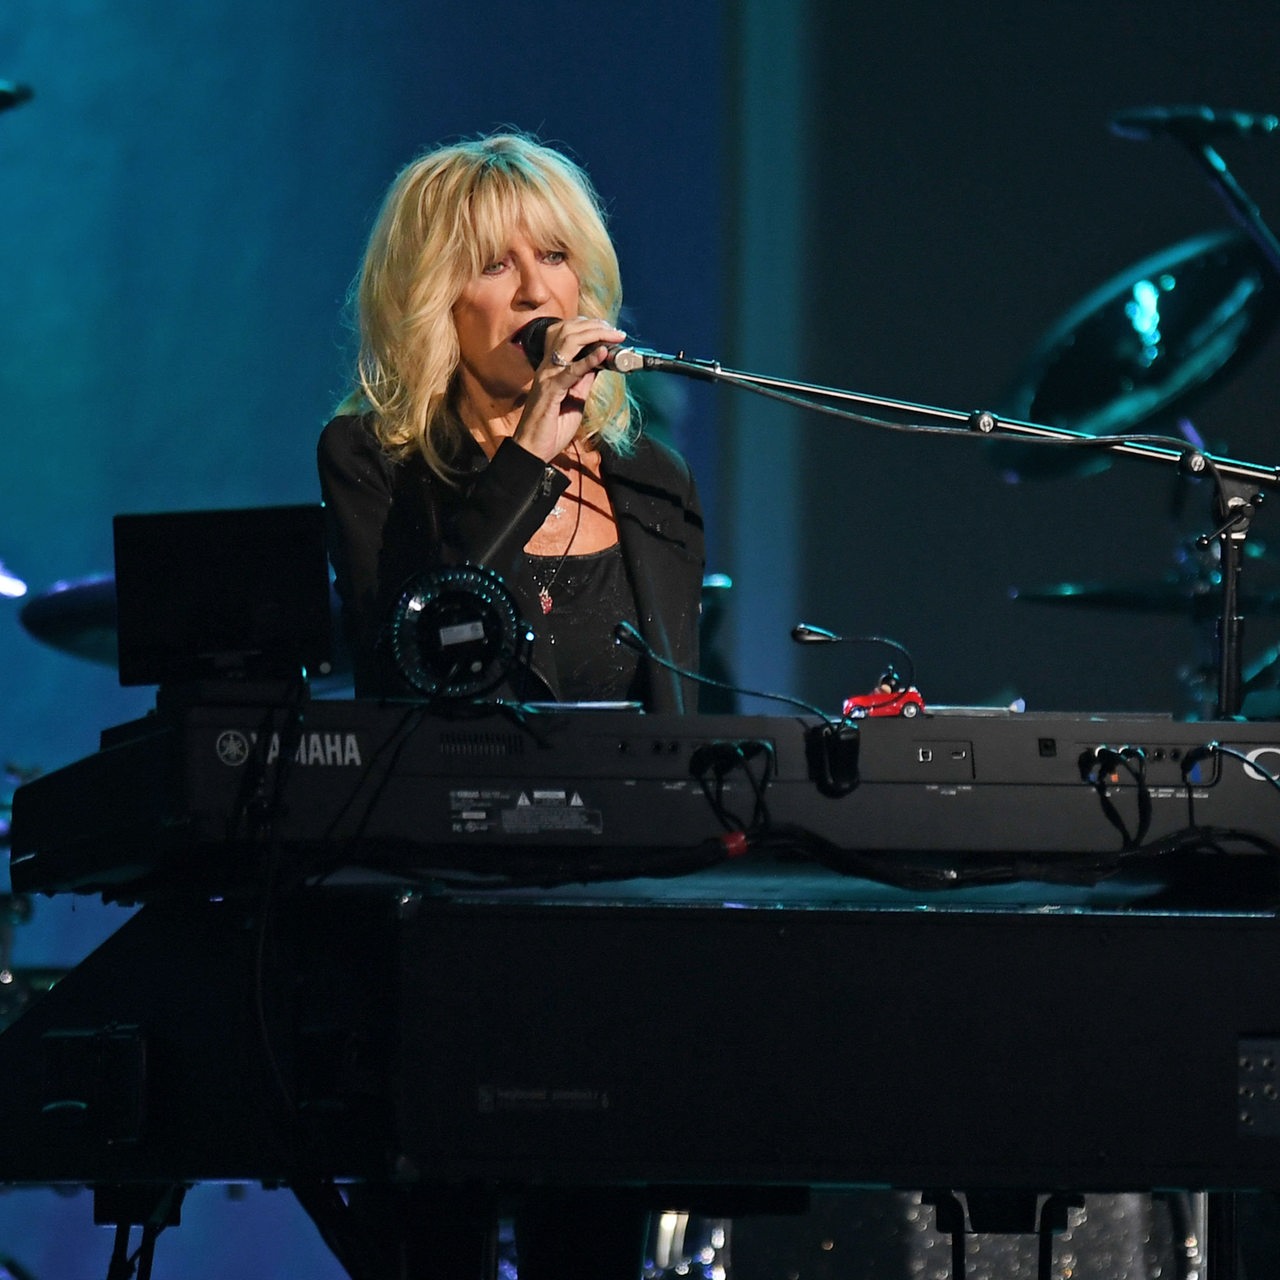 Musikerin Christine McVie (Fleetwood Mac) an Mikrofon und Synthesizer